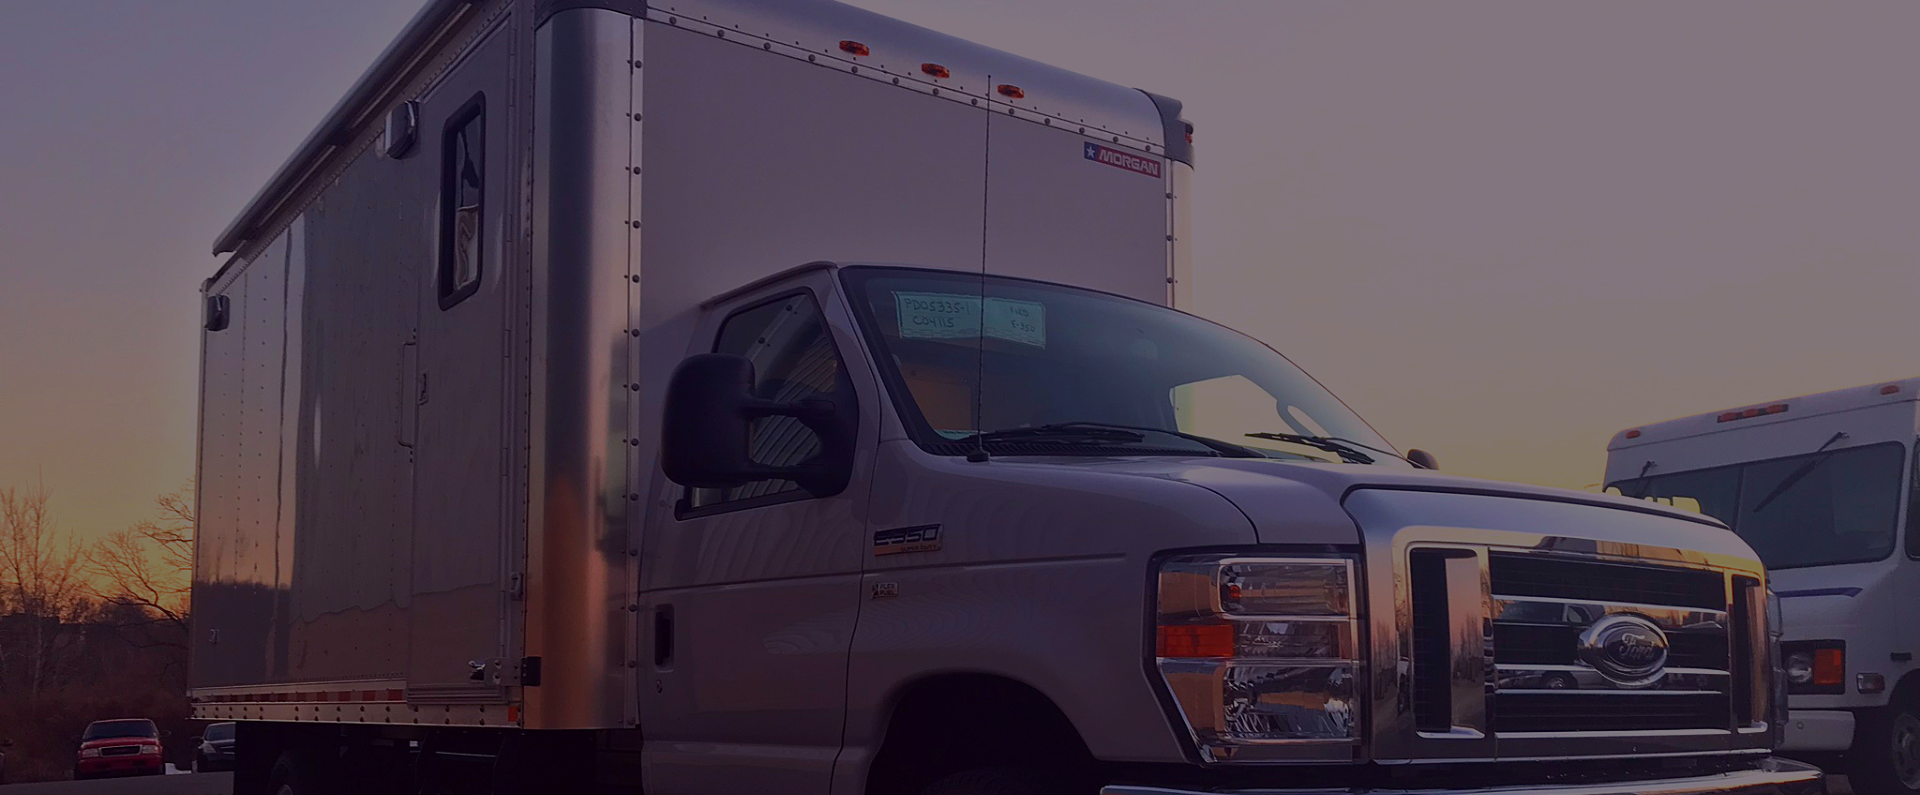 First Priority Emergency Vehicles Custom Box Trucks Specialty Vehicles